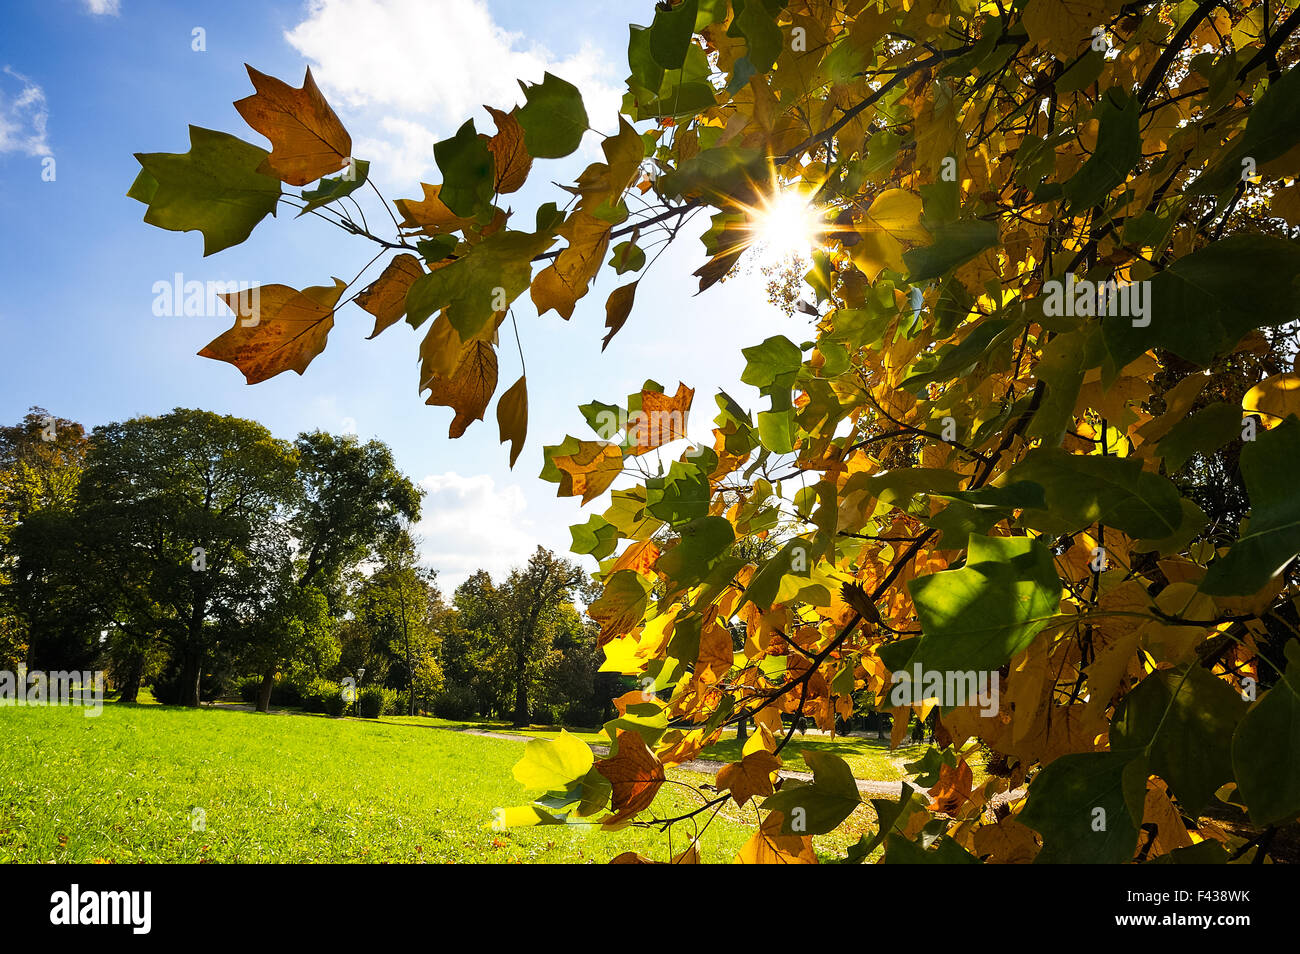 Sun shining through autumn leaves of a tree Stock Photo